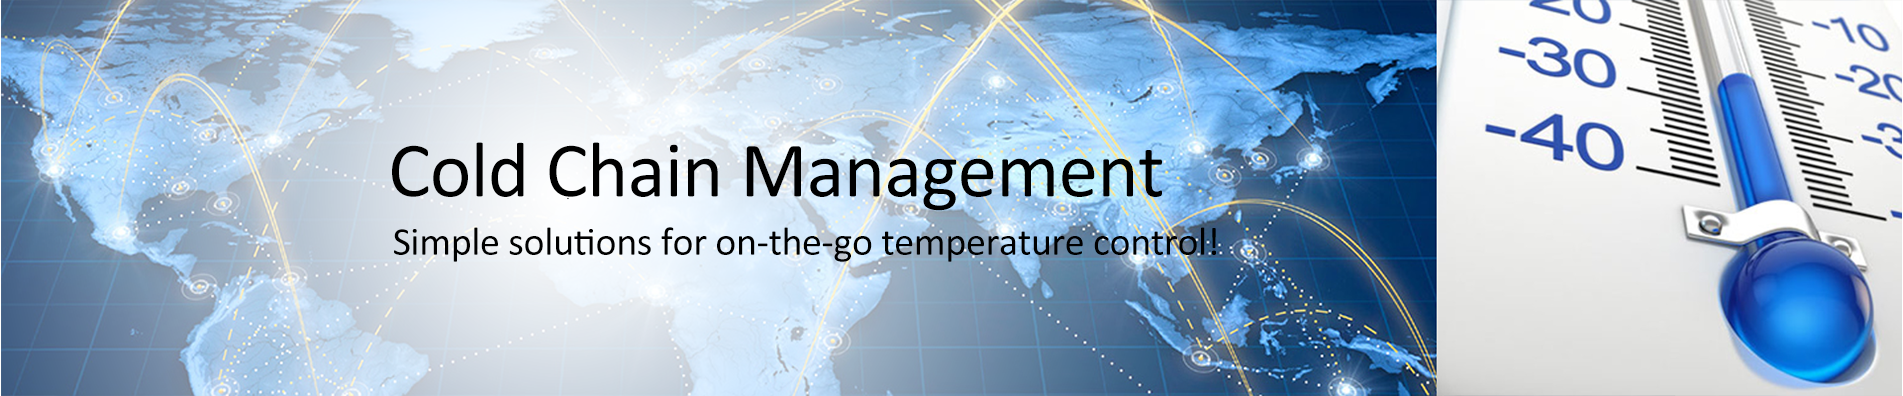 Cold Chain Management header